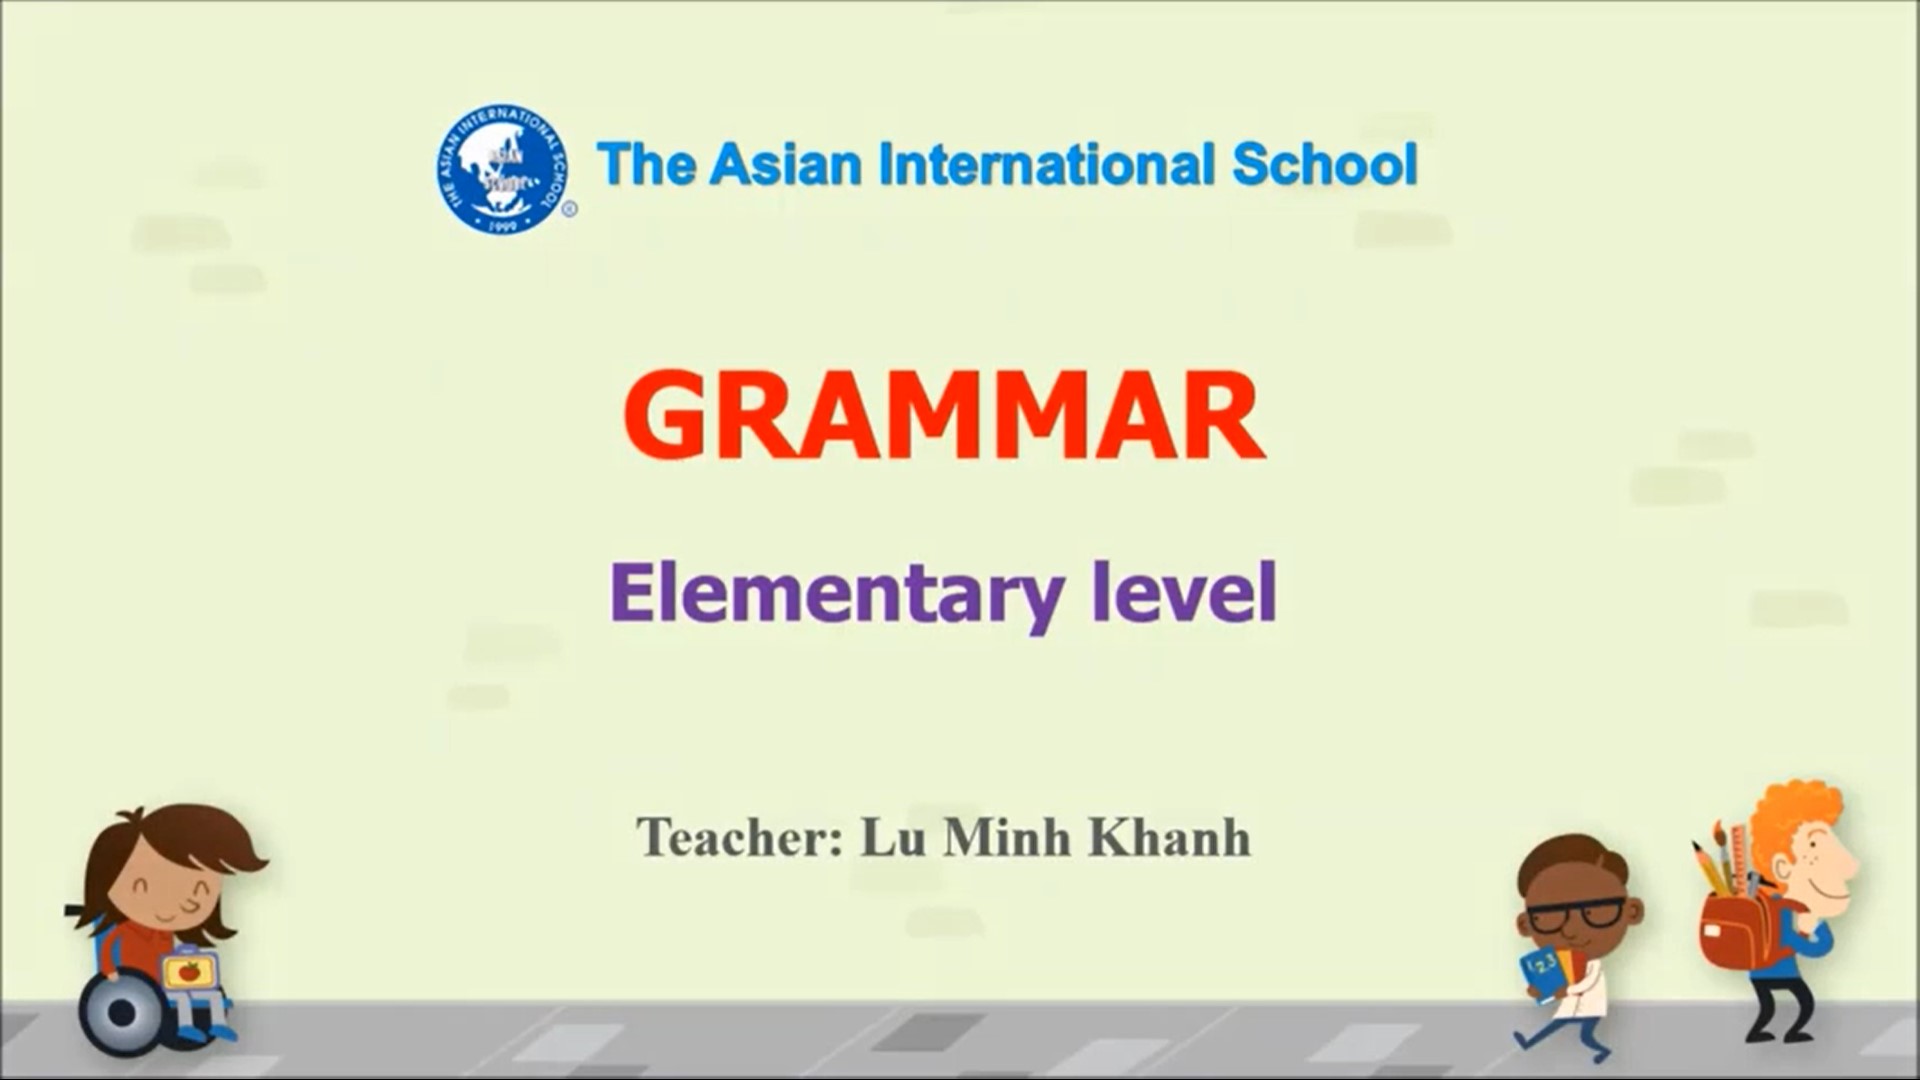 Use Complete Sentences - Teacher: Ms. Lu Minh Khanh | Grammar - Elementary level